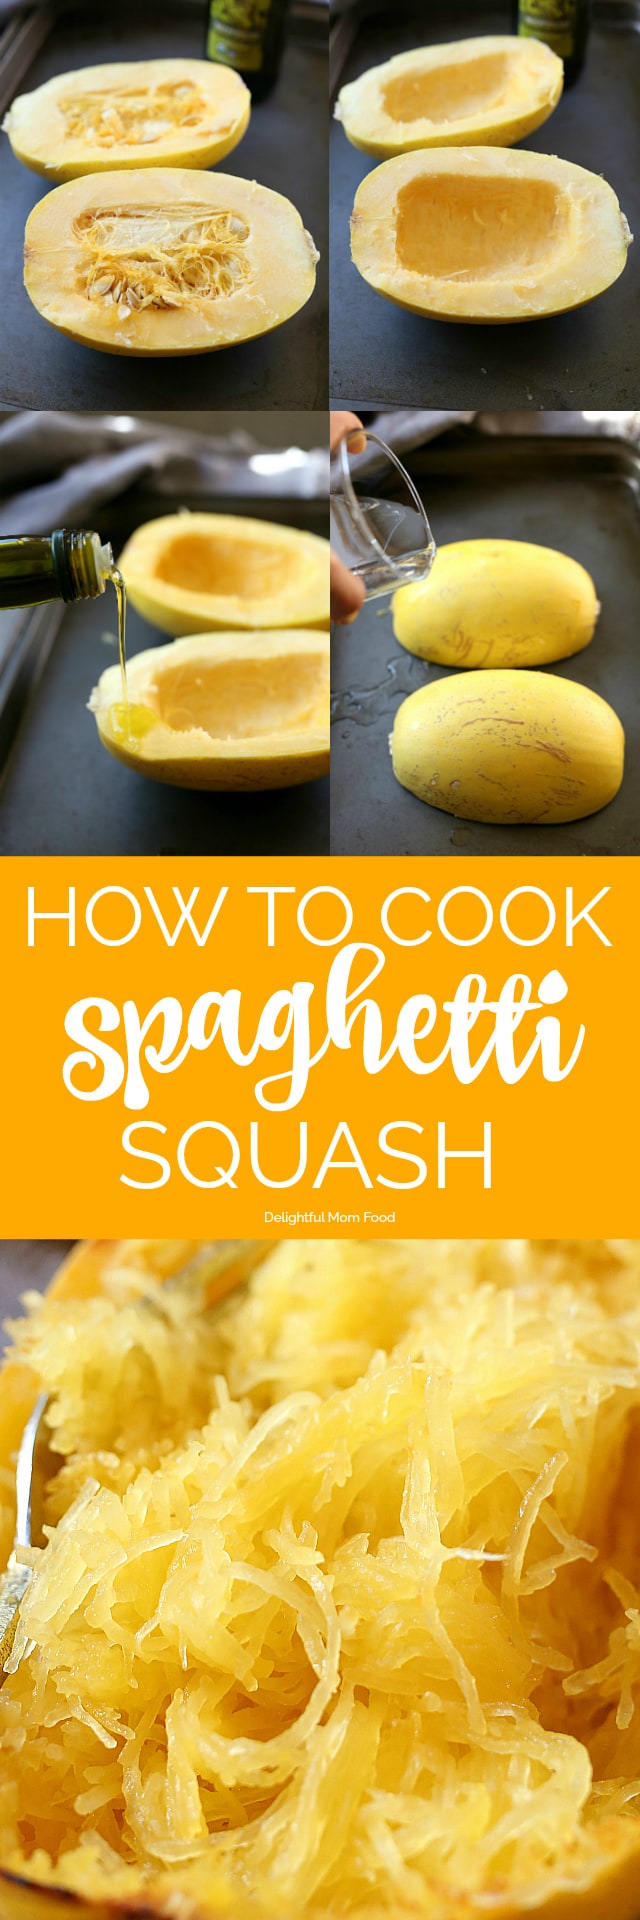 How To Cook Spaghetti Squash | Delightful Mom Food Gluten Free Recipes